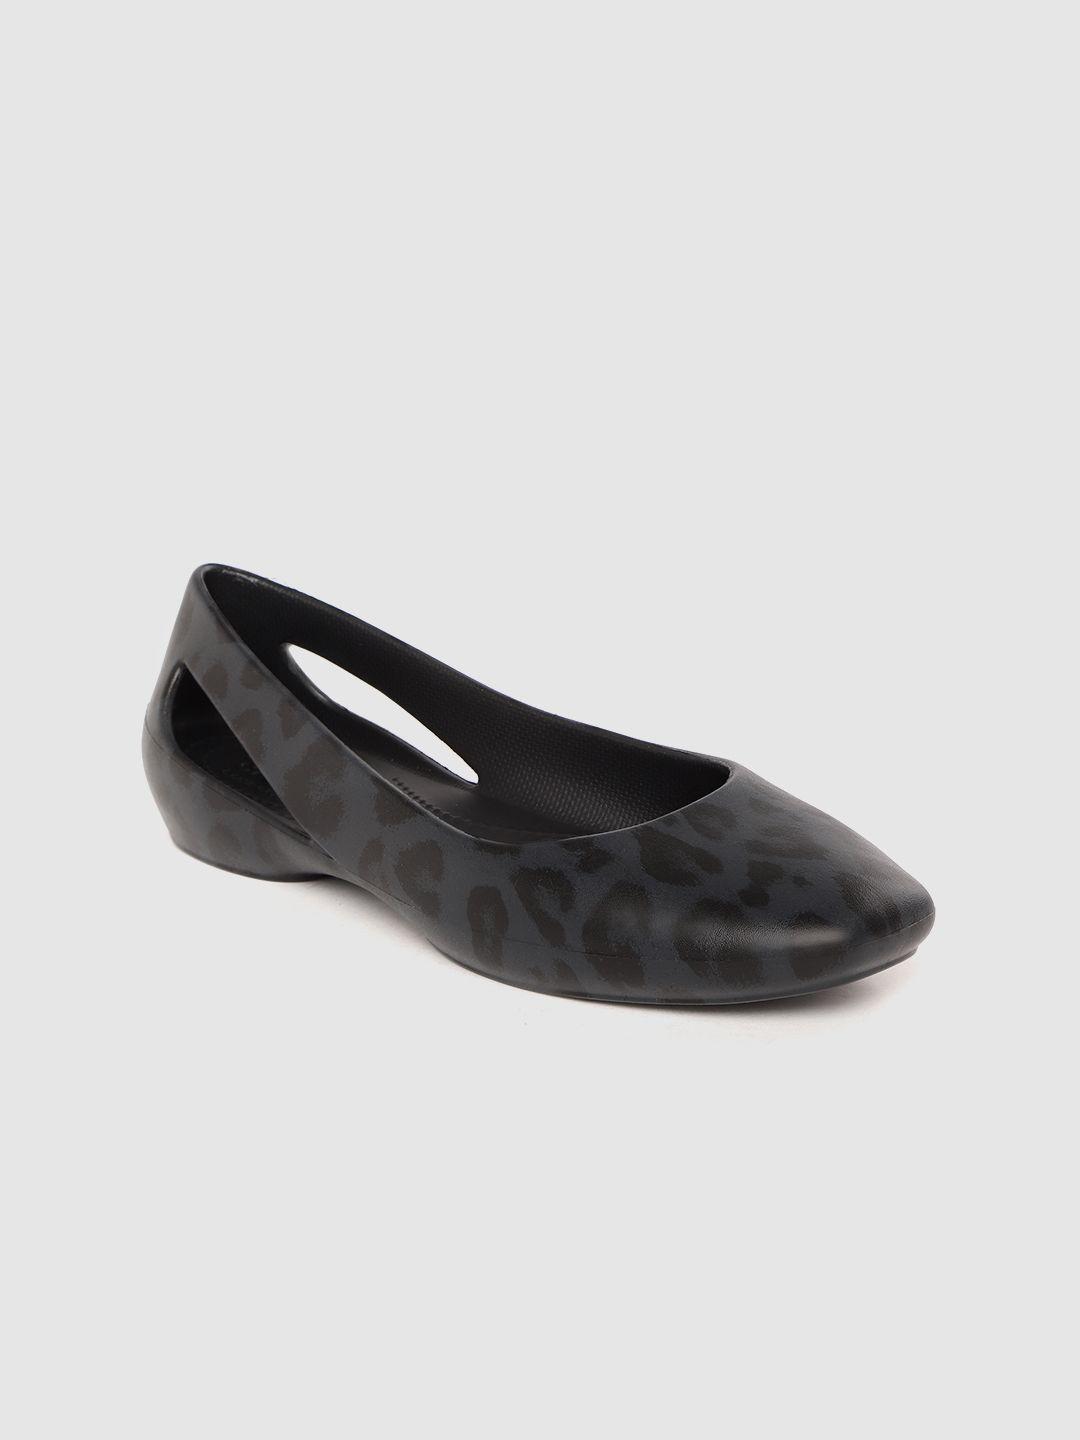 crocs-sloane-women-charcoal-grey--black-leopard-print-ballerinas-with-cut-outs